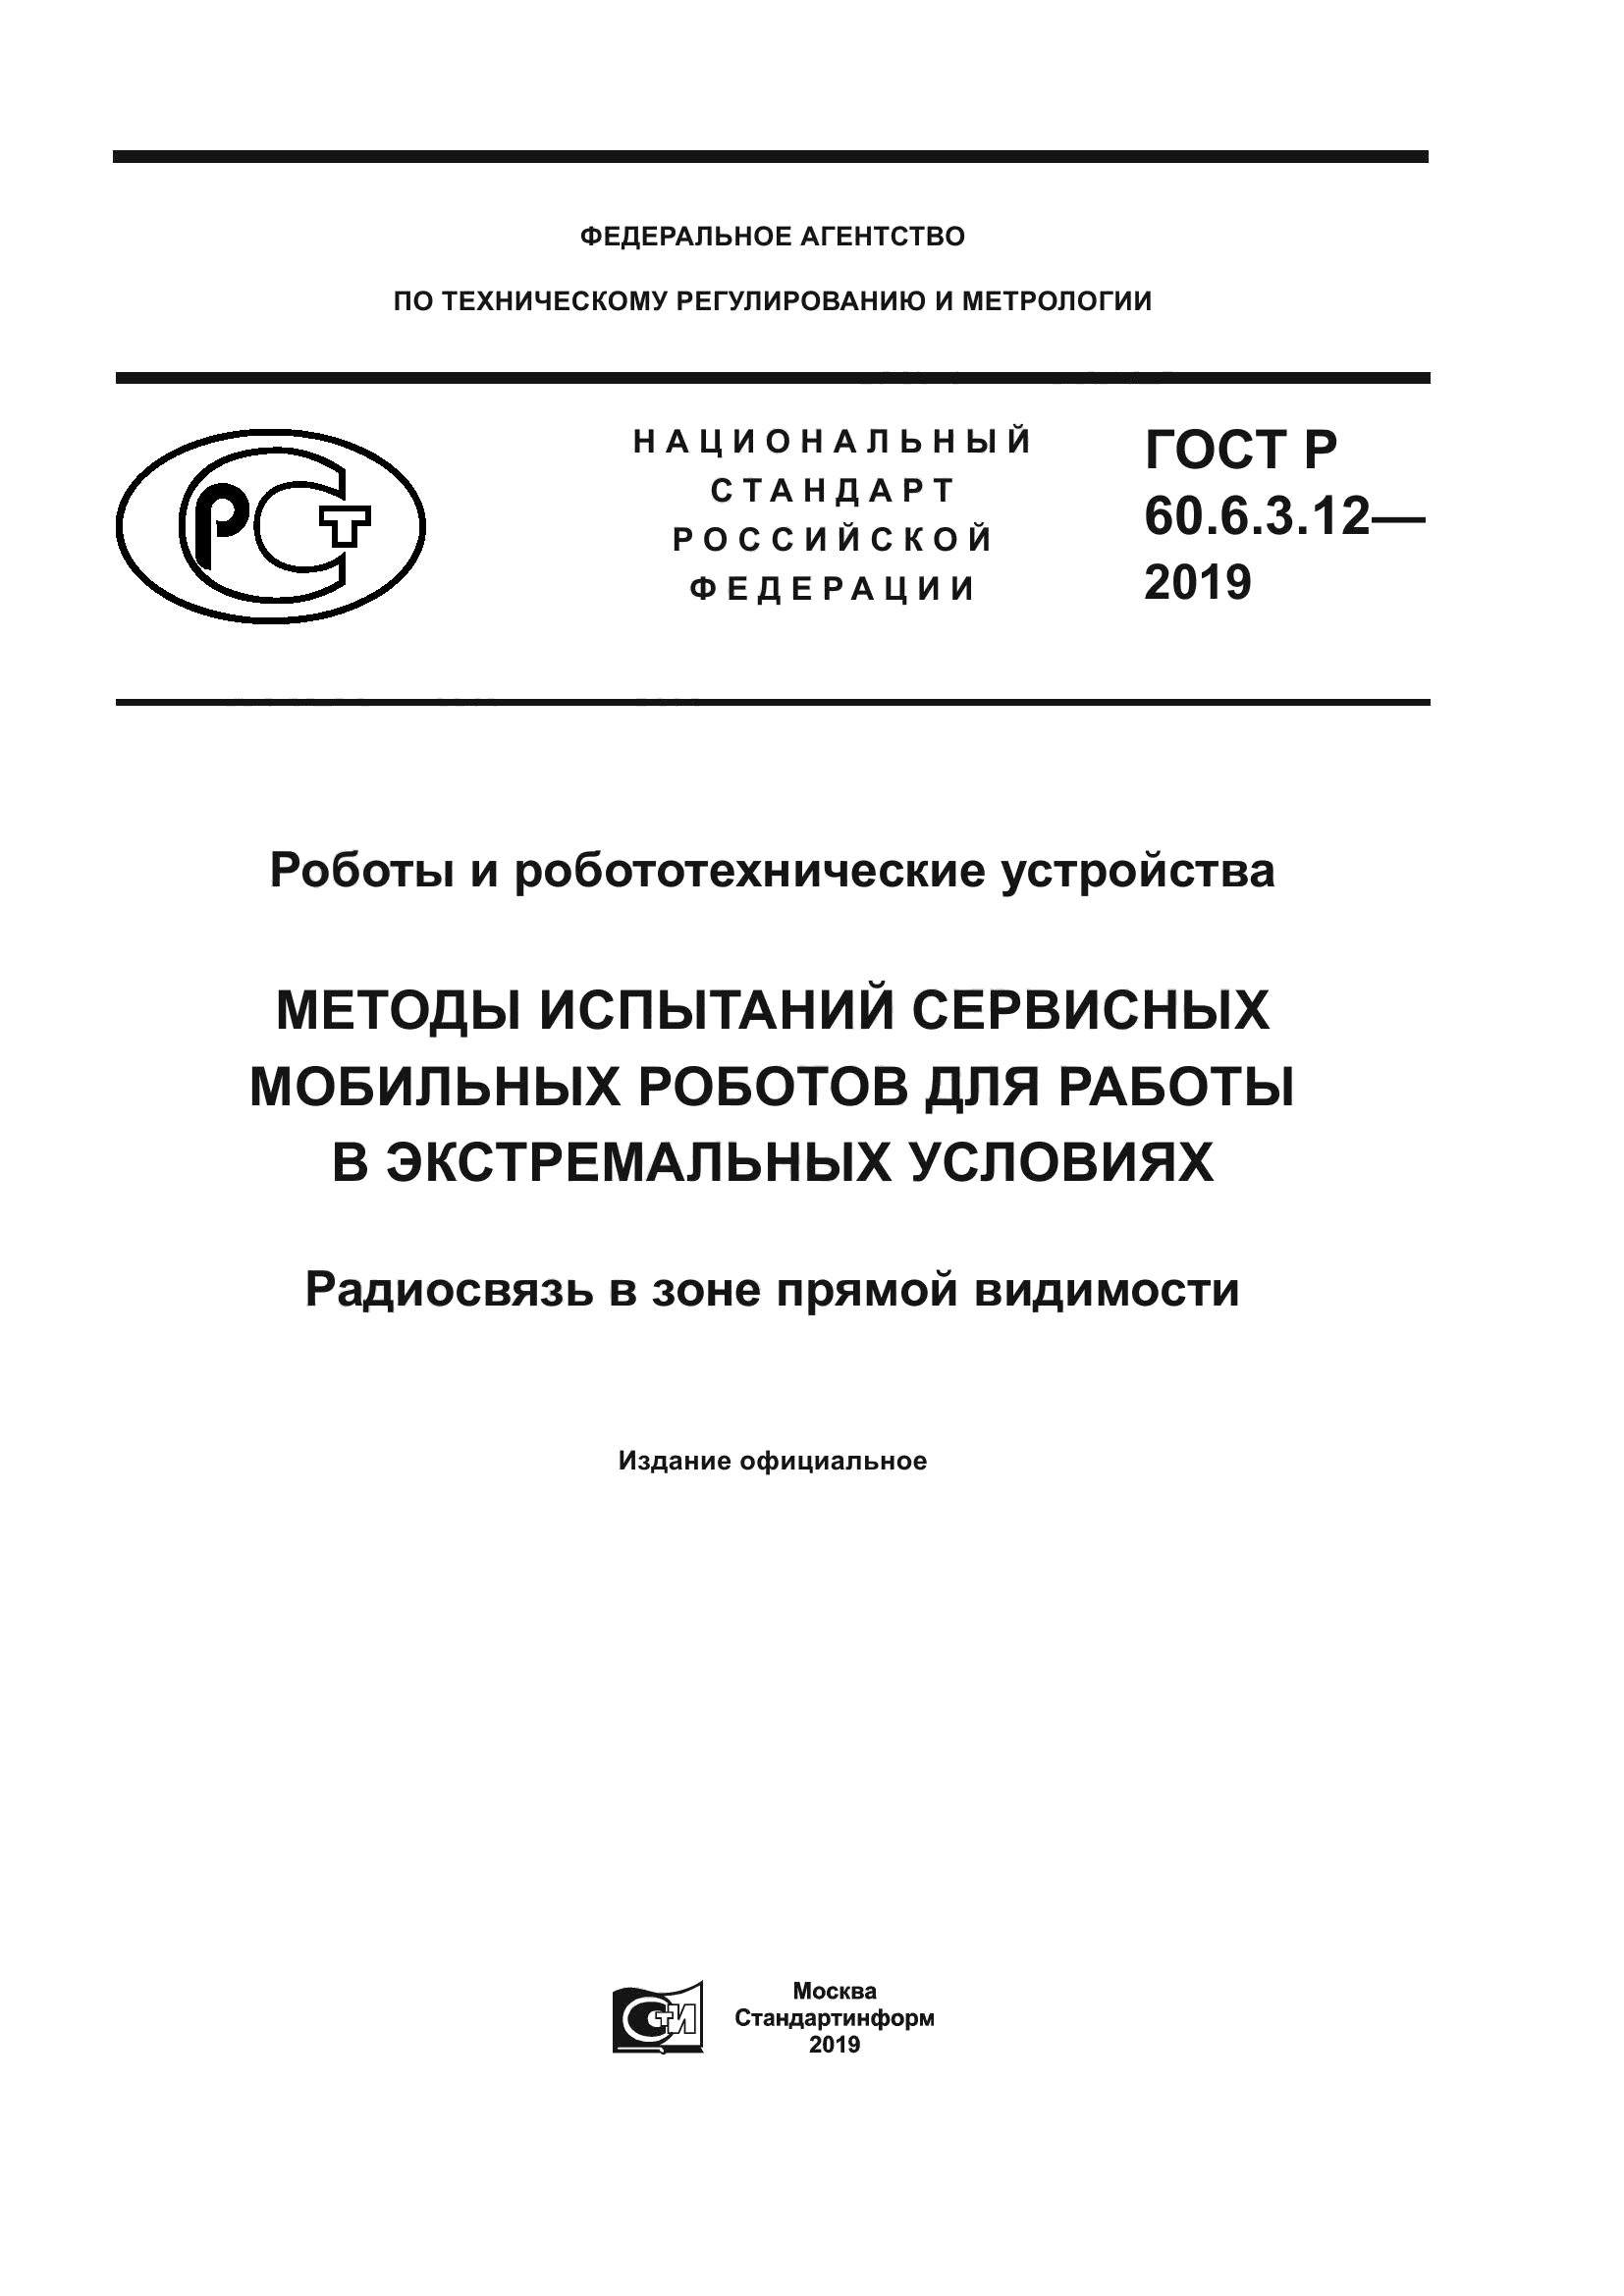 ГОСТ Р 60.6.3.12-2019